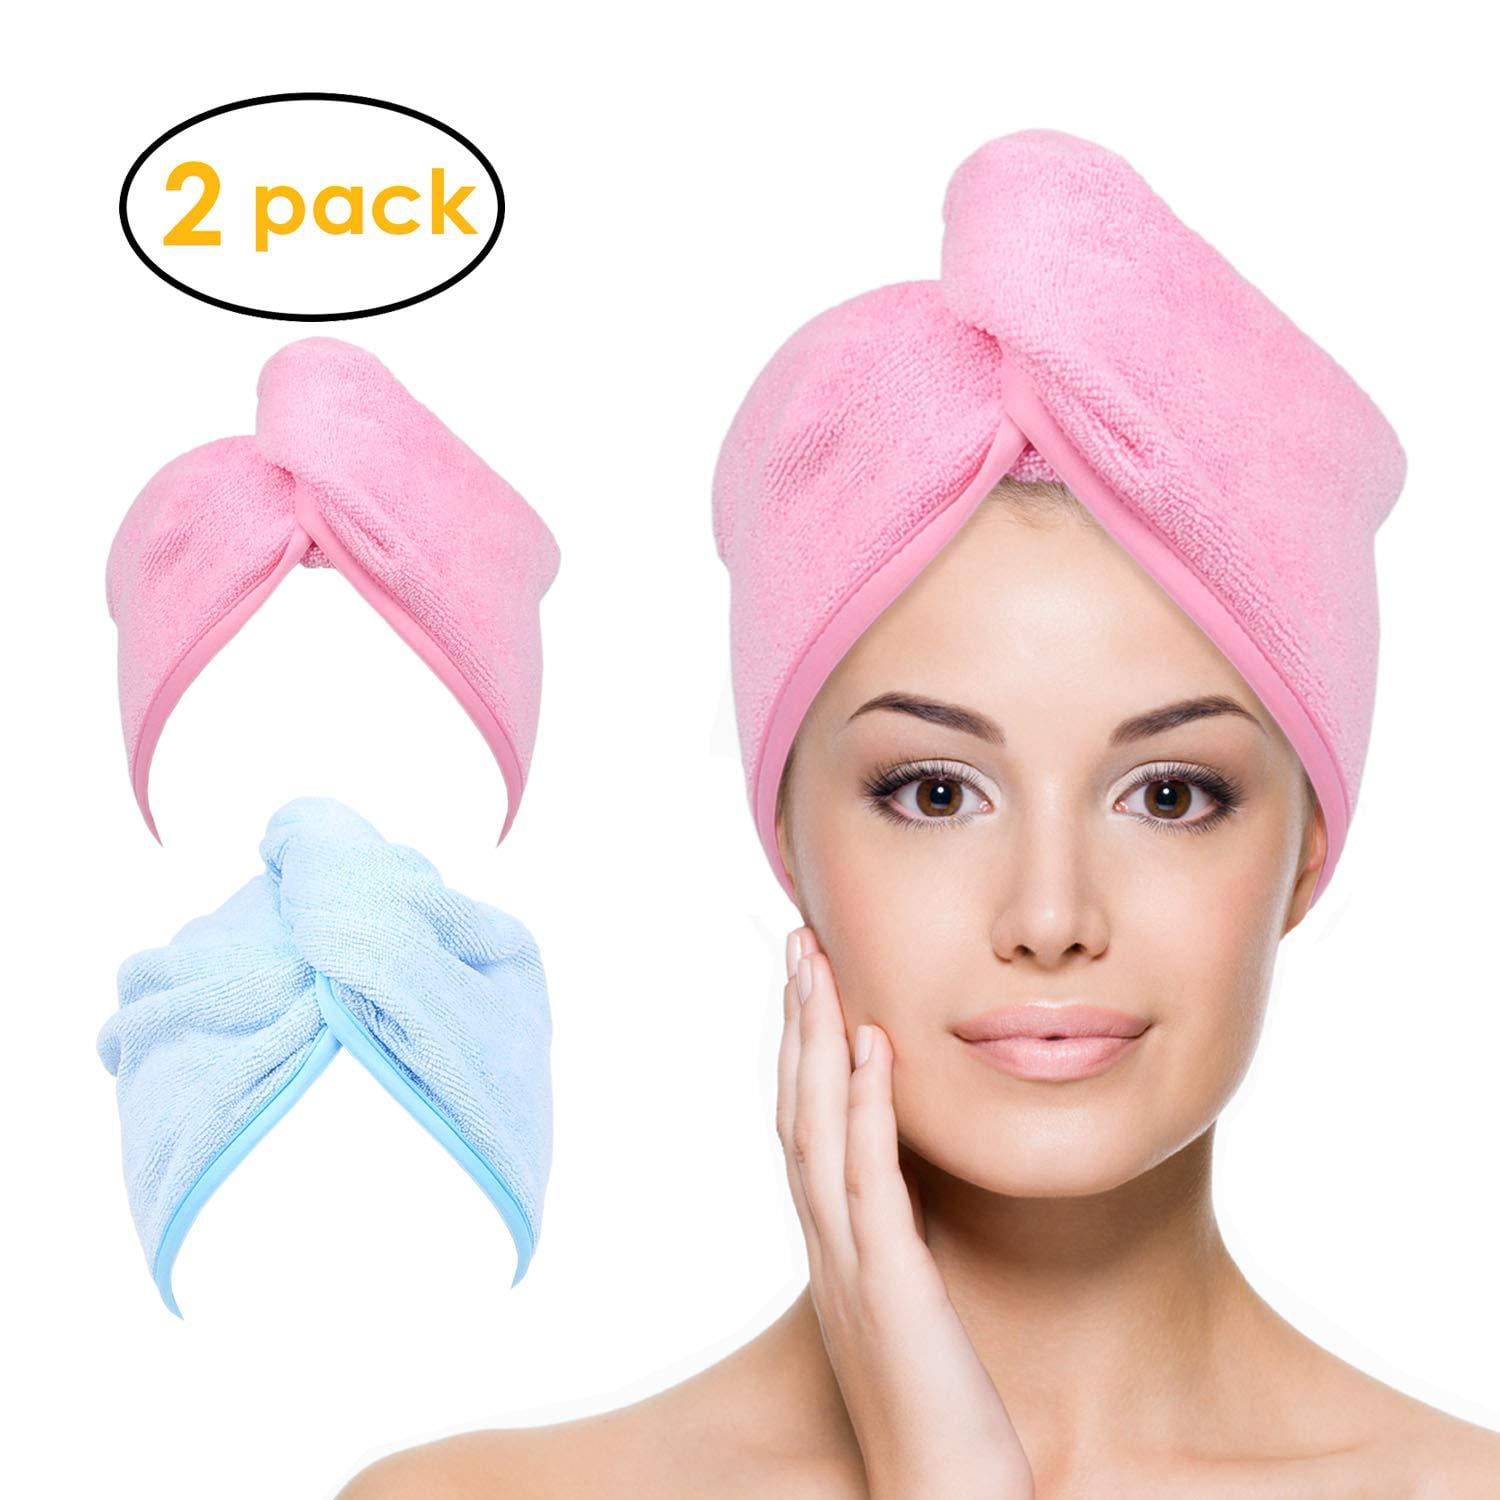 2 pcs Microfiber Hair Wrap Quick Drying Turban Towel Spa Headband Pink khaki US 